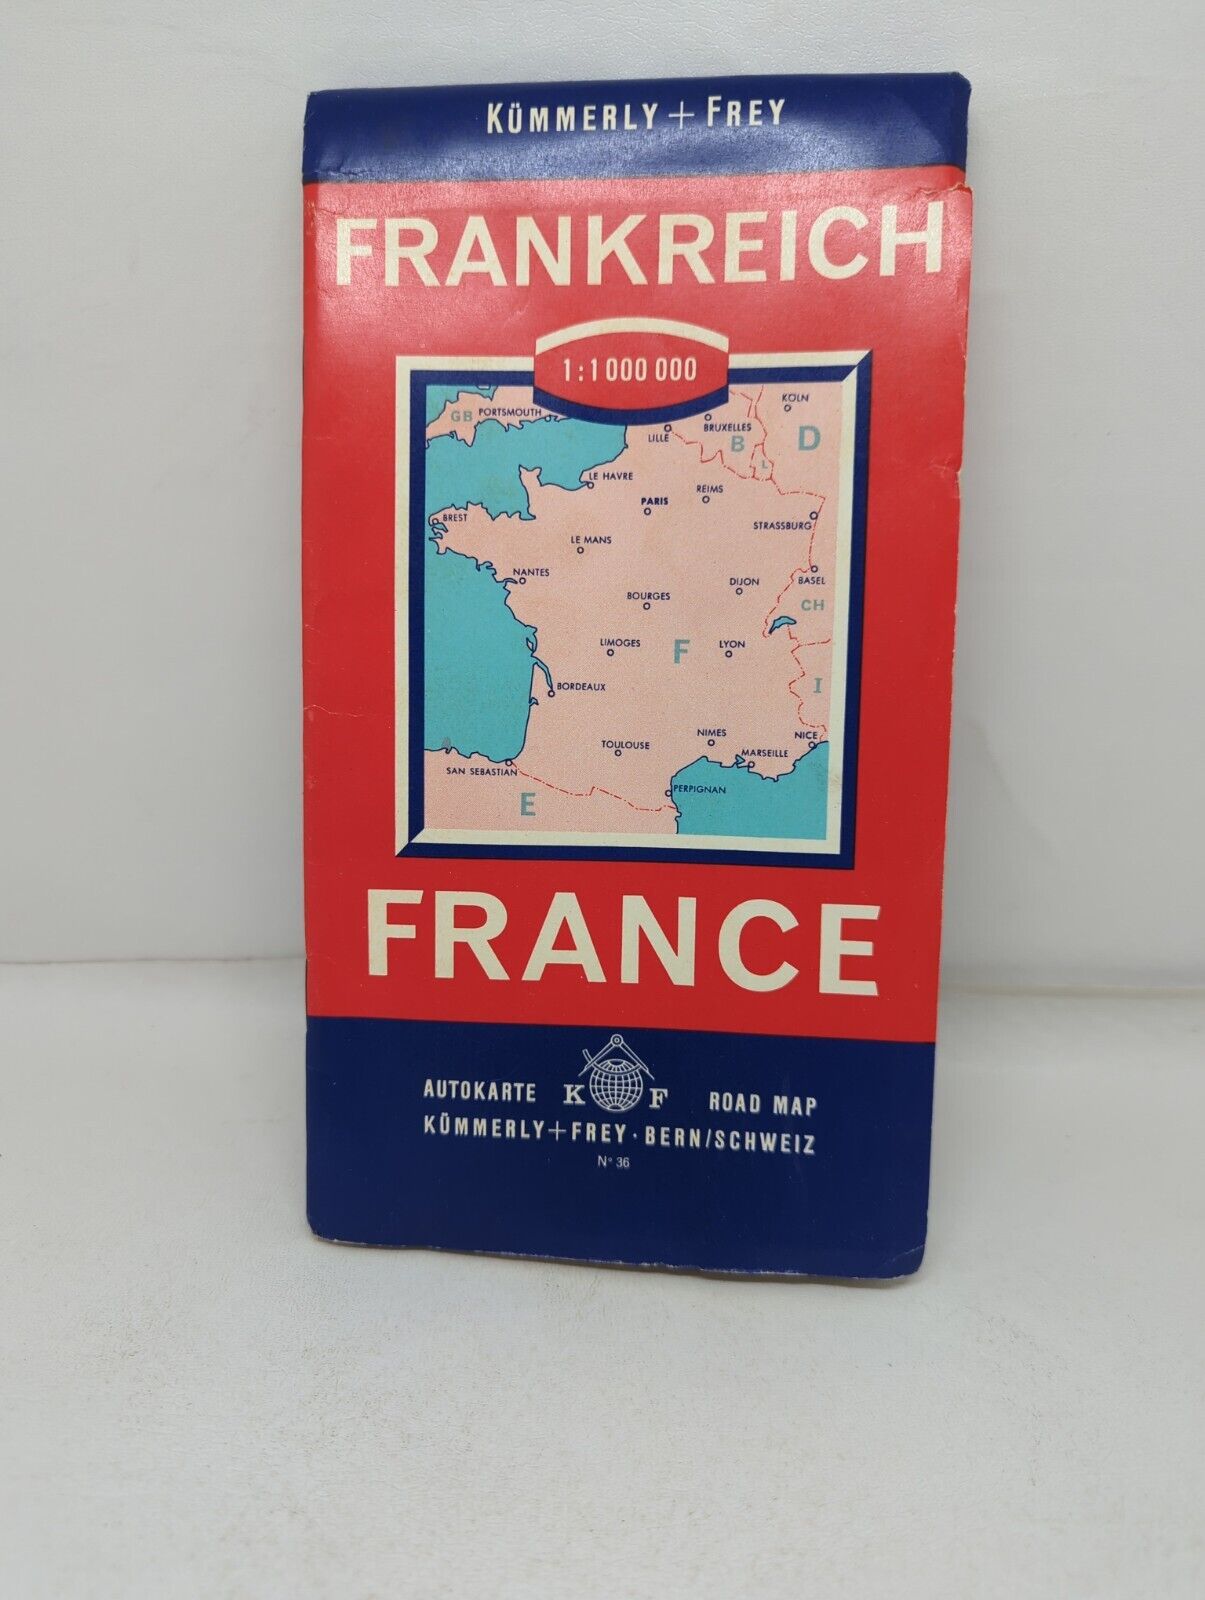 VTG Folding Travel Map France Frankreich Kummerly Frey Berne No. 36 dated 1961